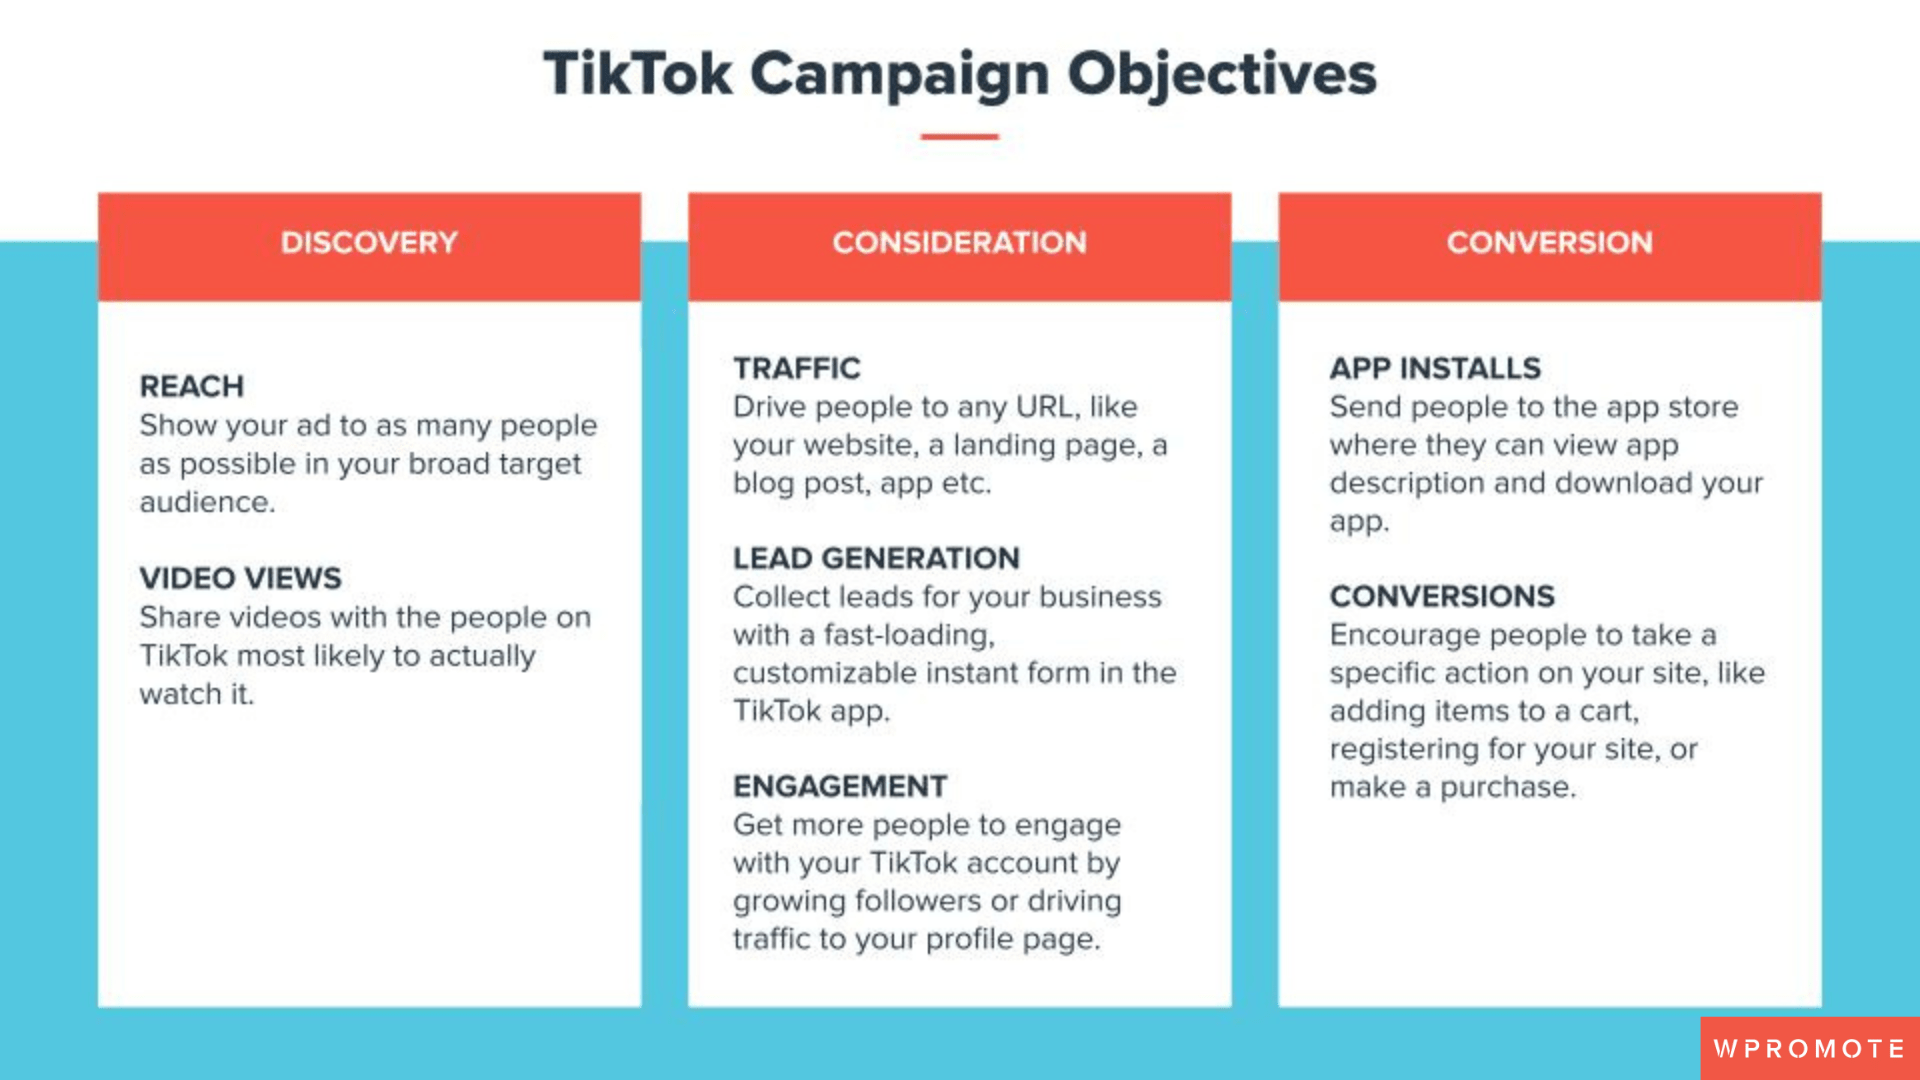 List of TikTok Campaign Objectives